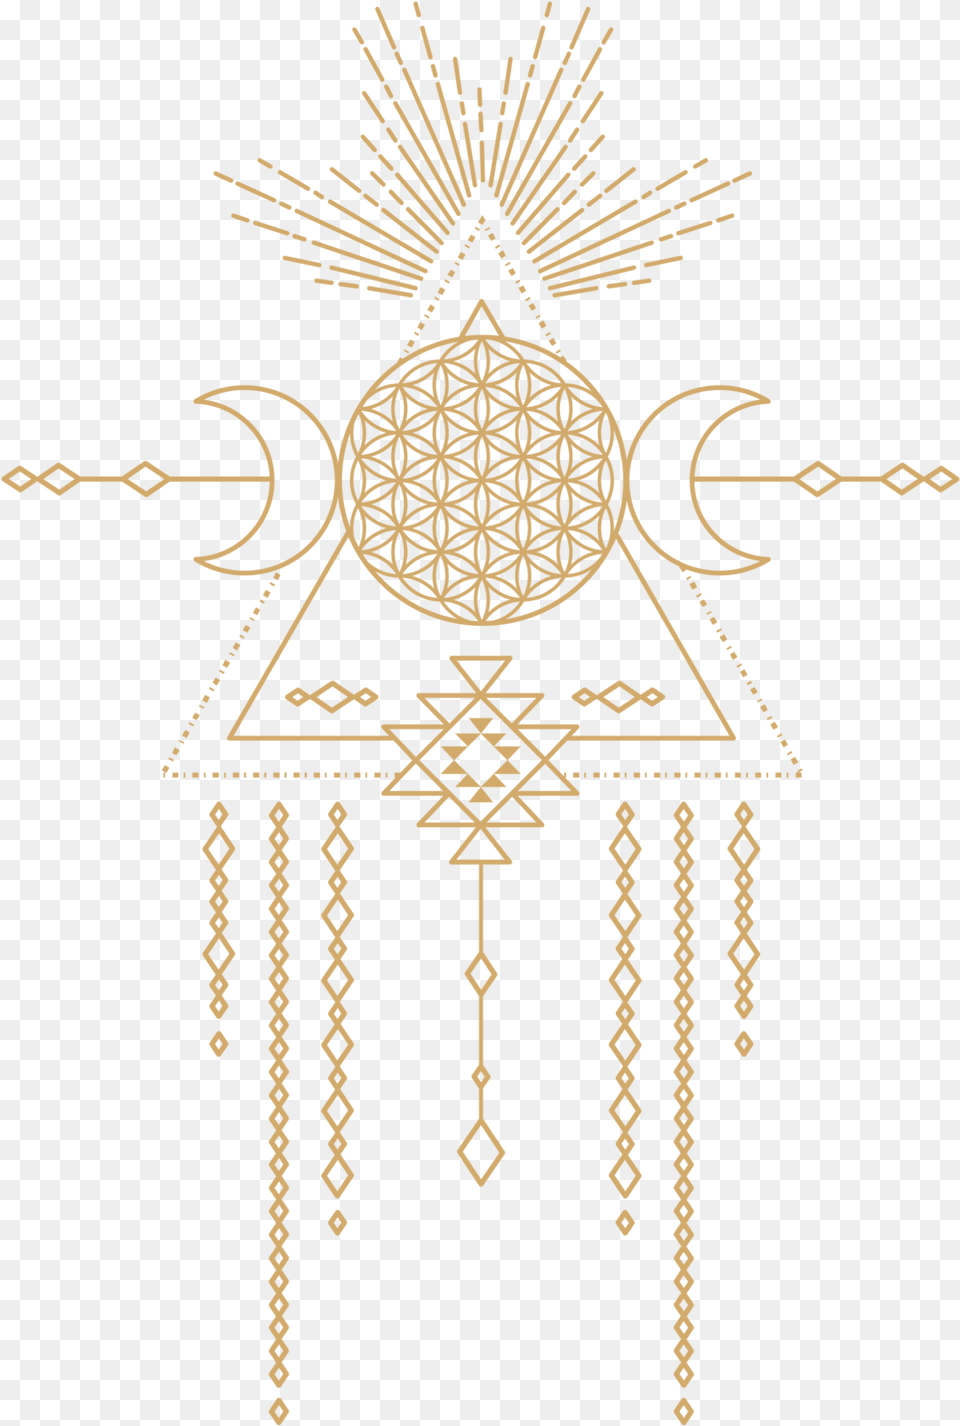 Tribal Shaman Mandalas By Skybox Creative 03 Illustration, Cross, Symbol Free Transparent Png